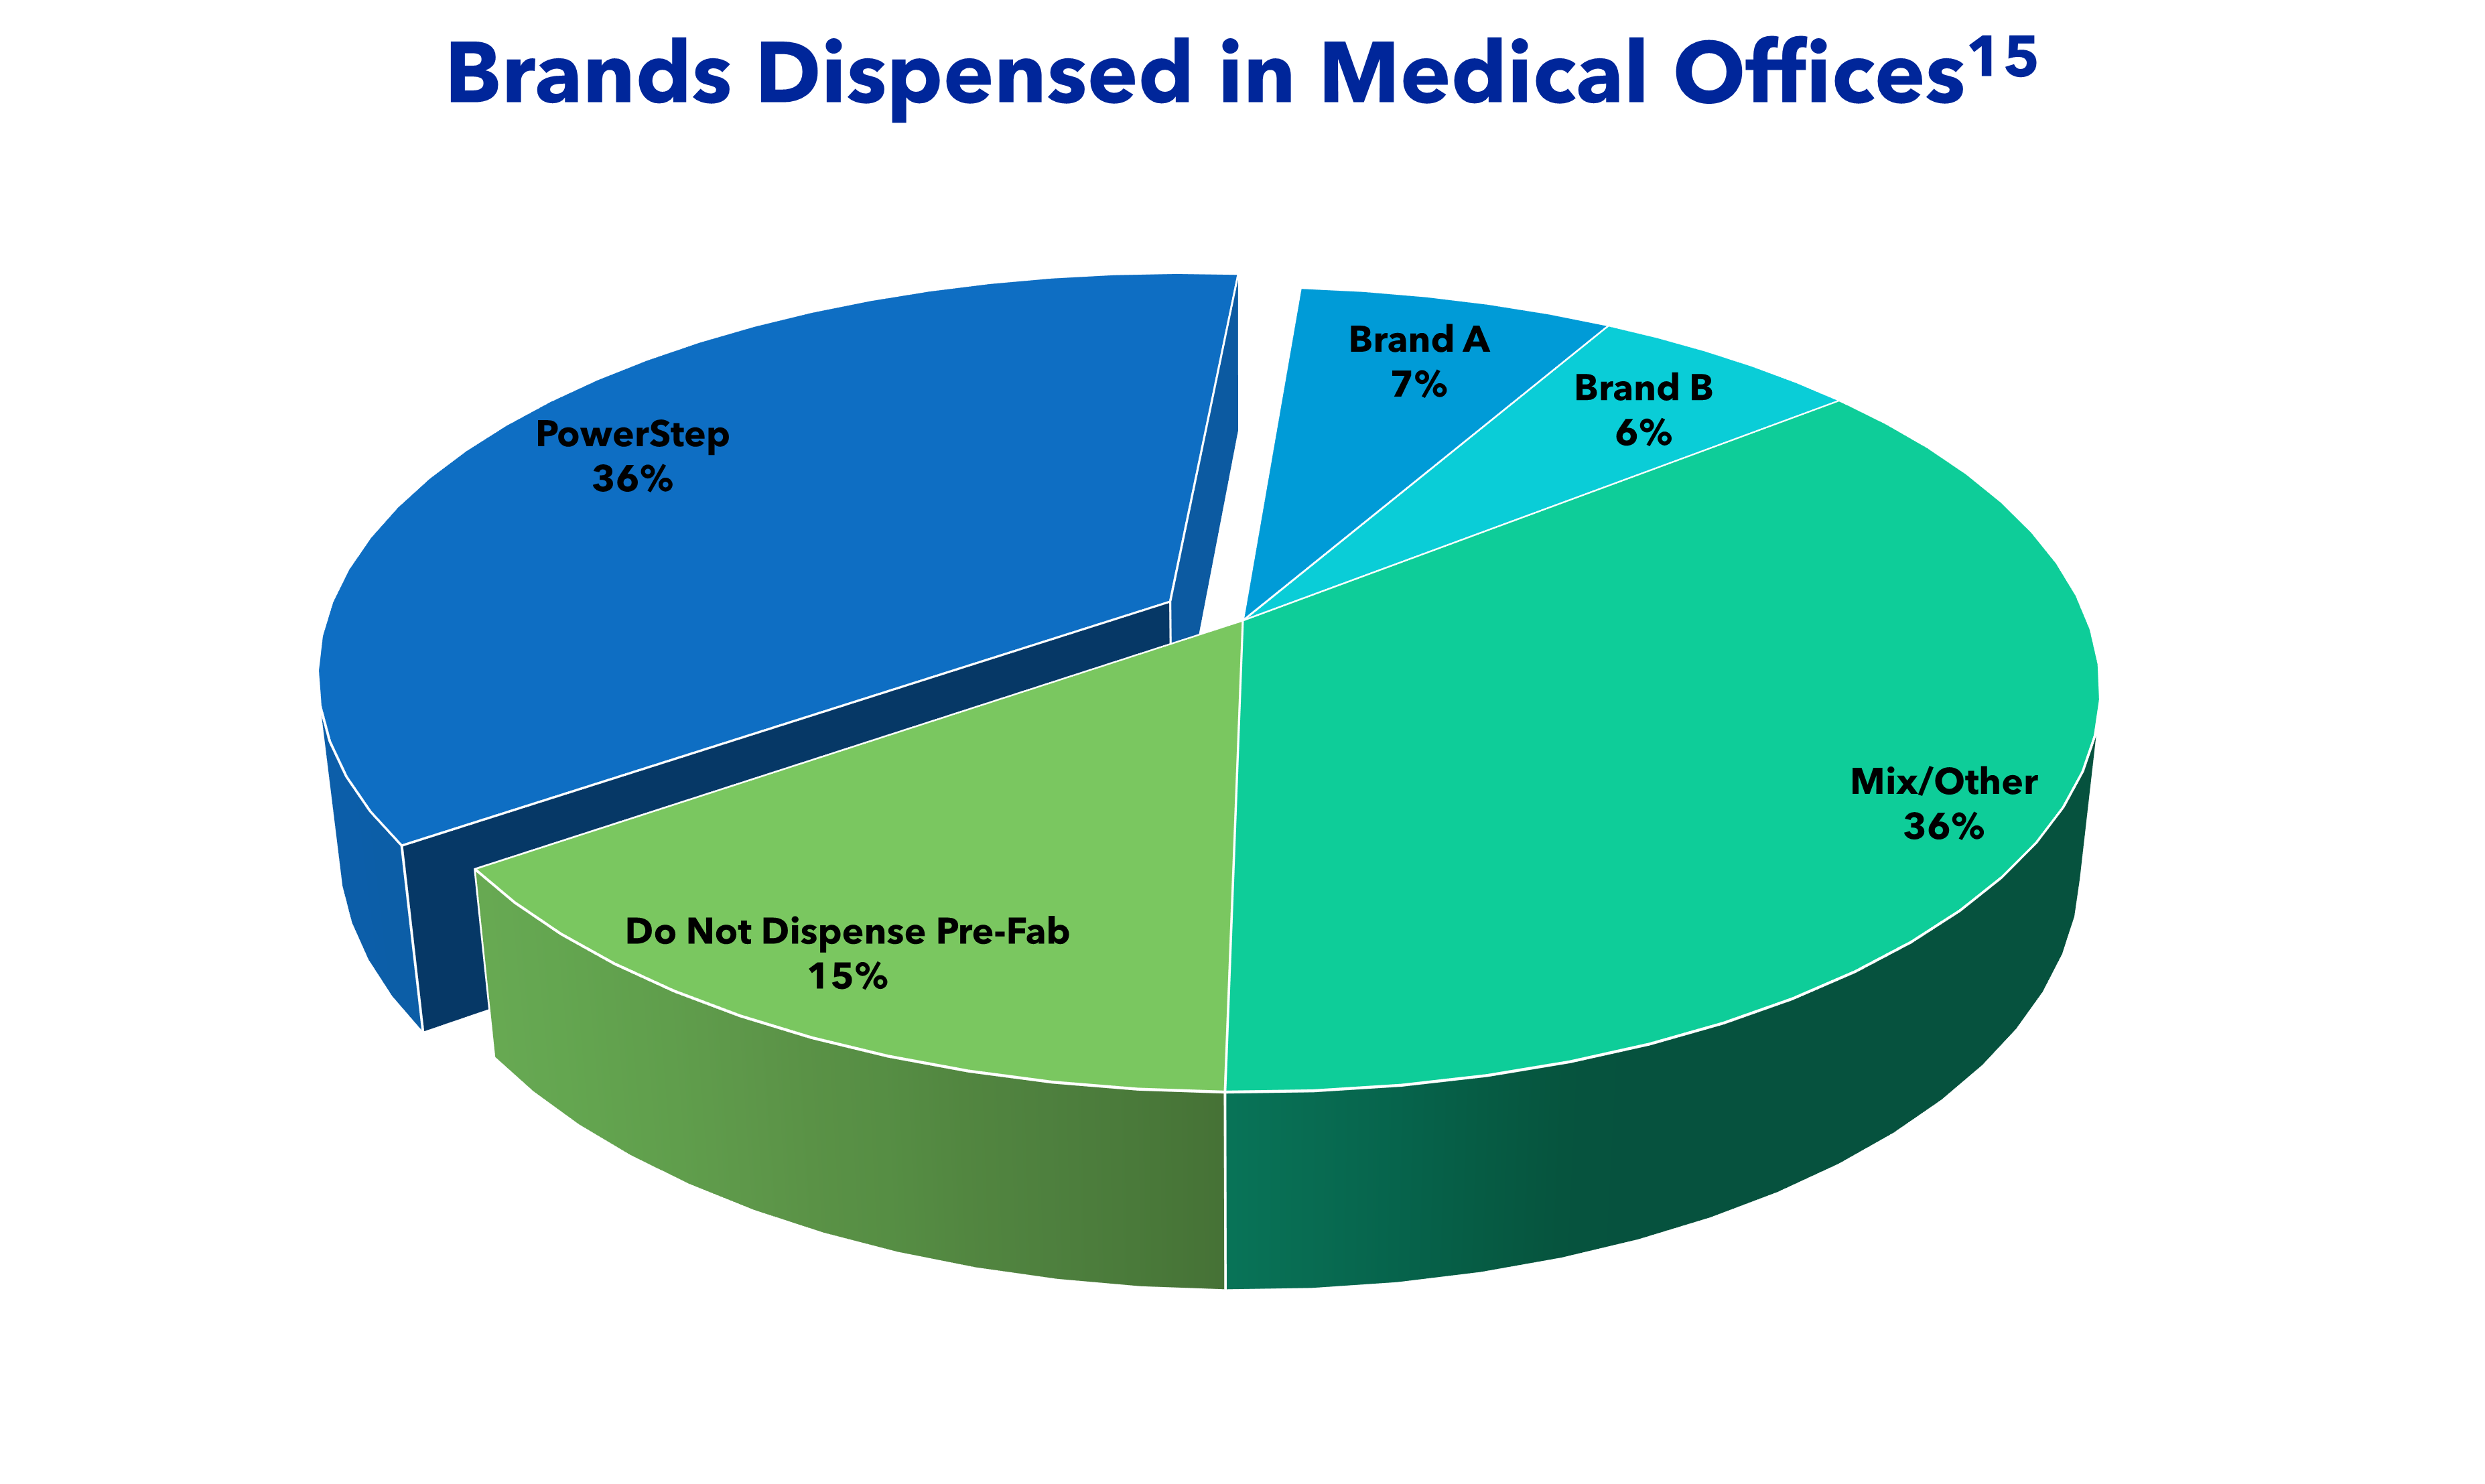 Brands dispensed in medical offices, PowerStep is dispensed in 36%